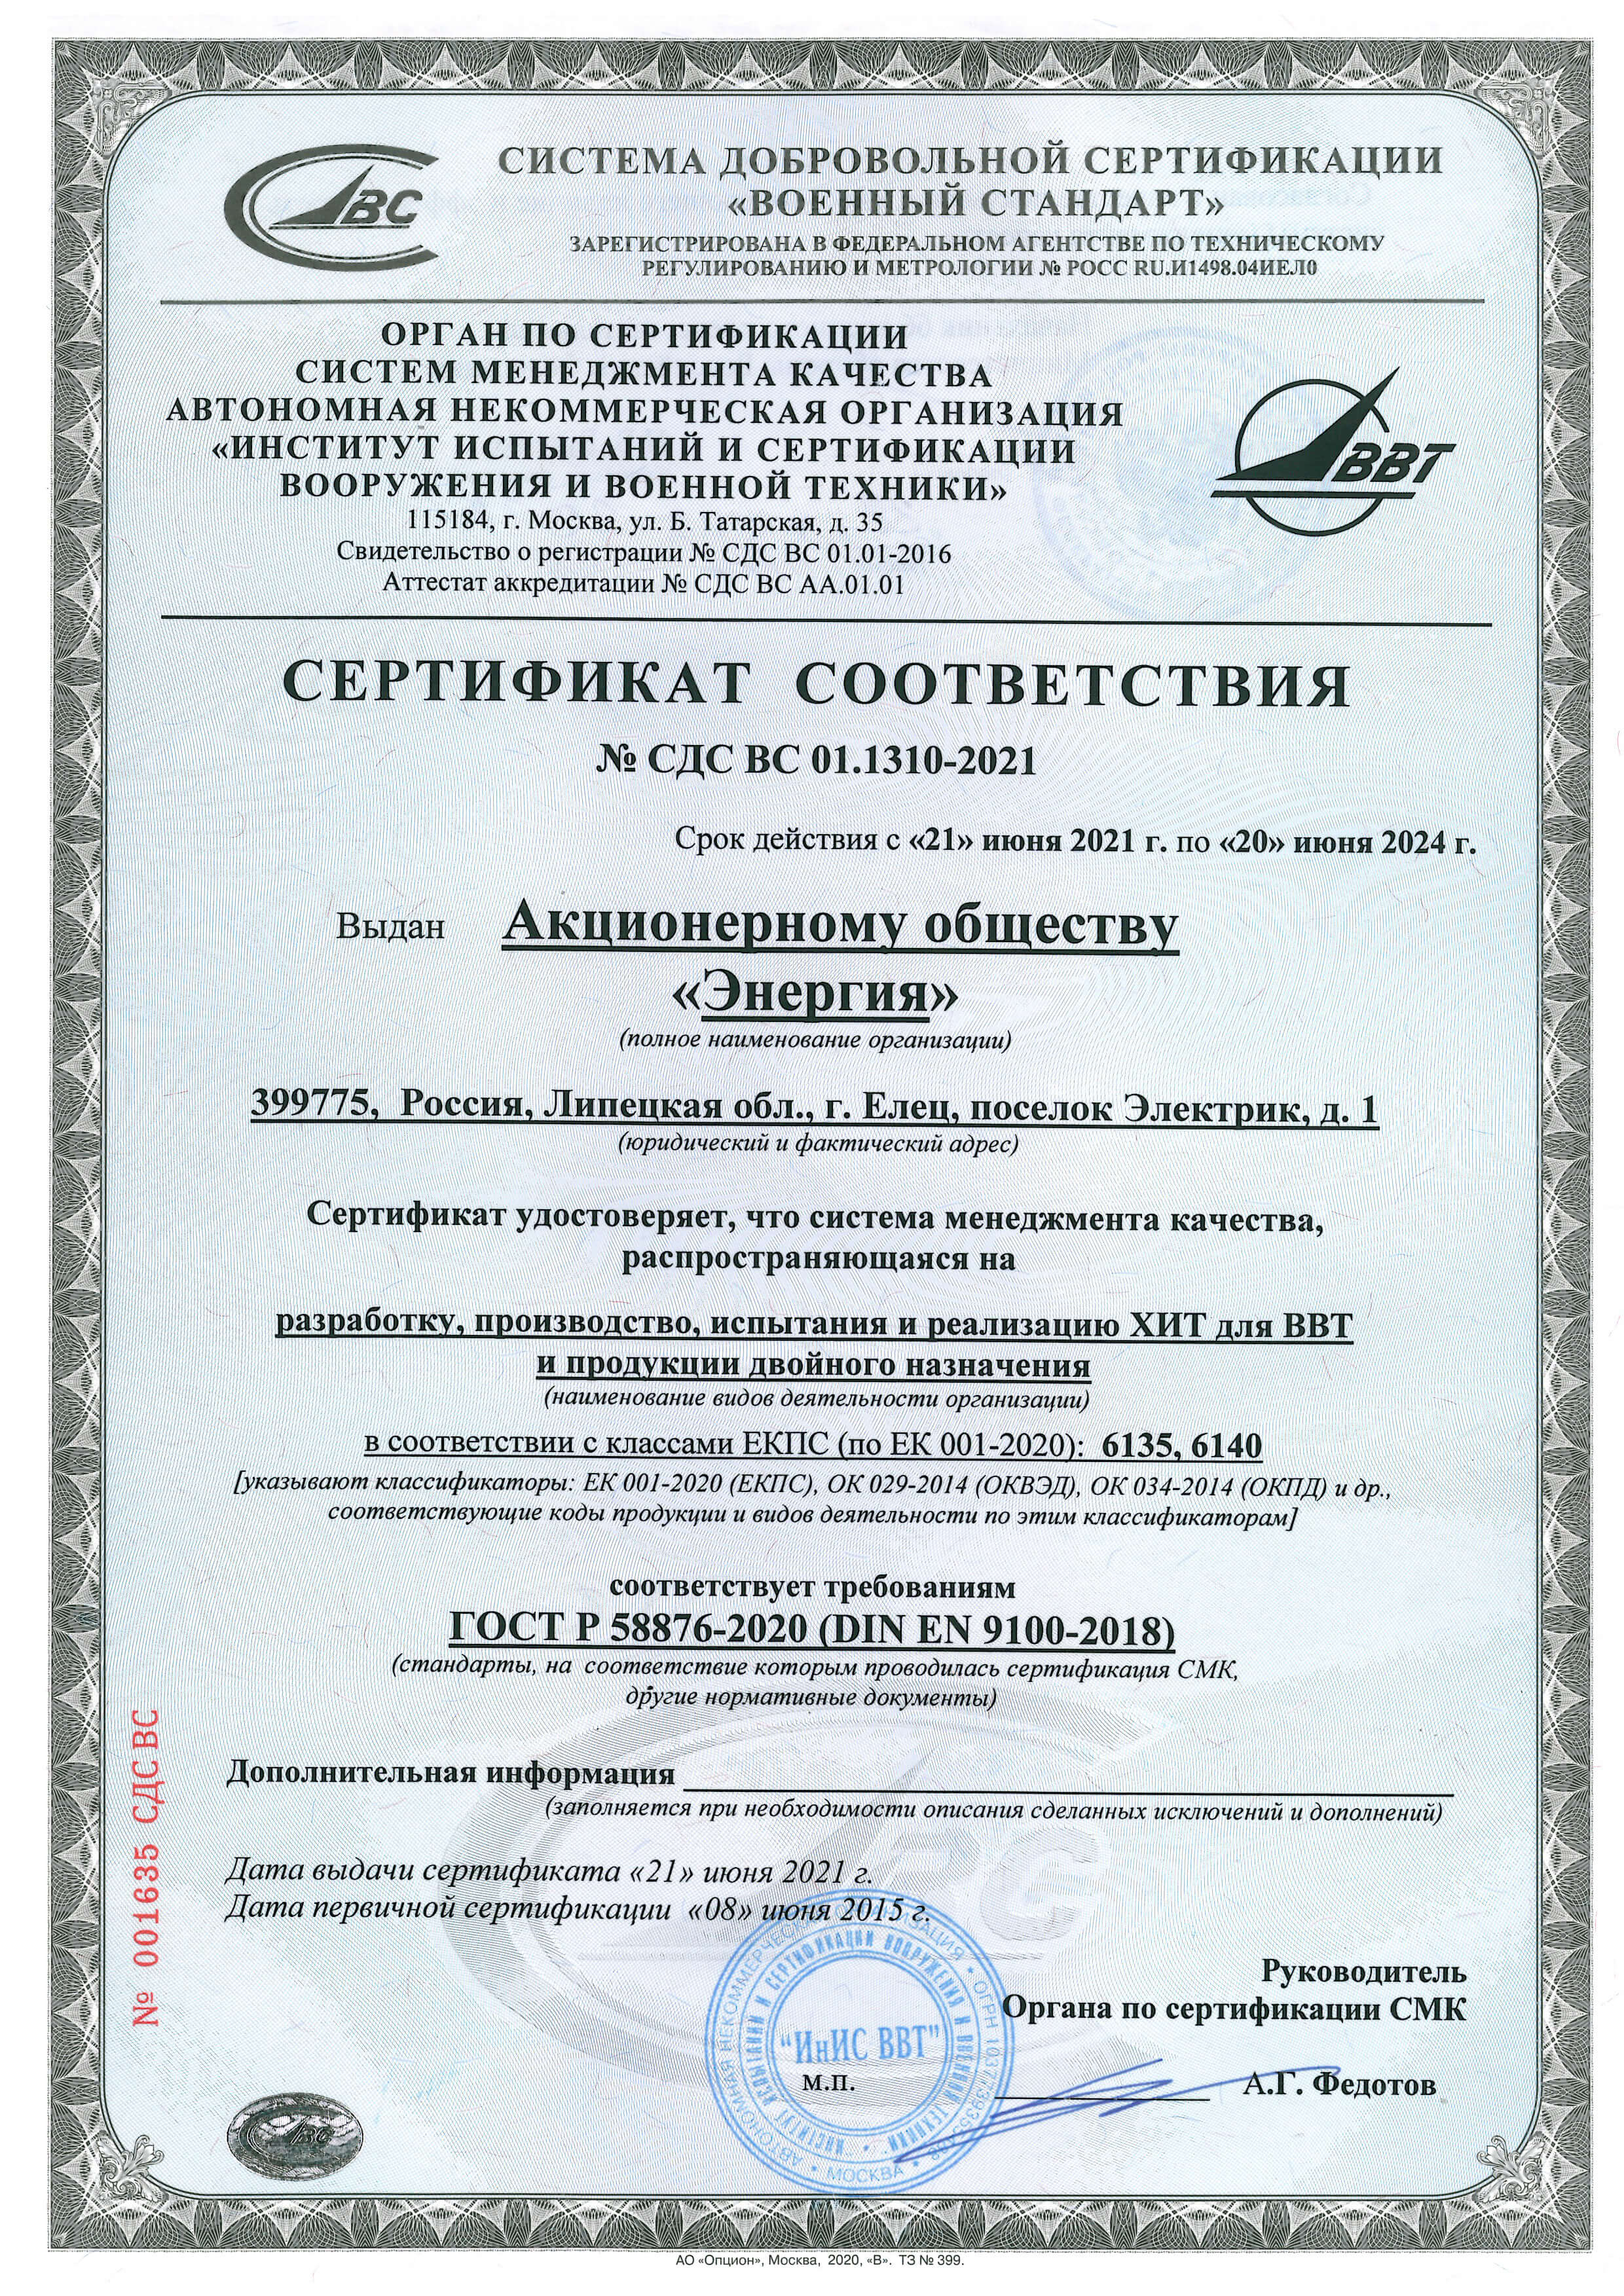 Смк 2020. Сертификат ГОСТ РВ 0015-002-2020. Сертификат соответствия ГОСТ РВ 0015-002-2020. СМК ИСО 9001 ГОСТ РВ 0015-002. ГОСТ РВ 0015-002-2020.